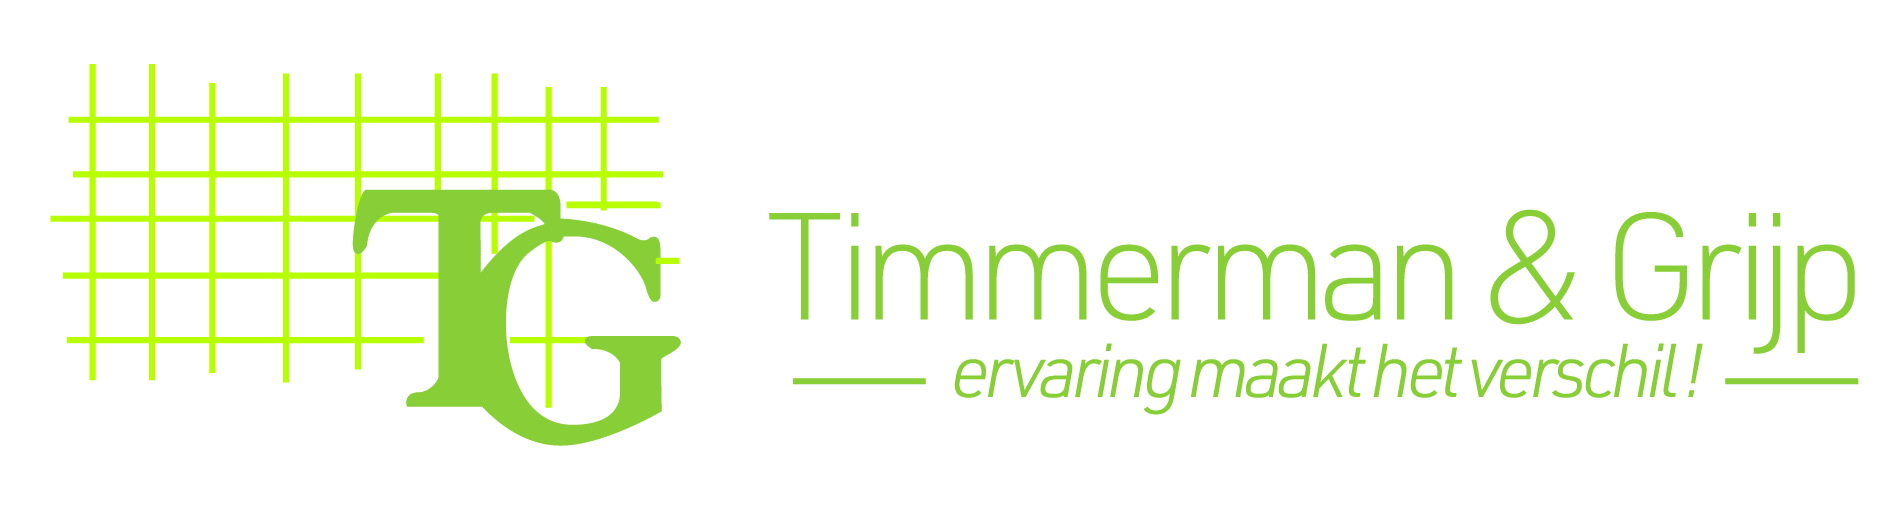 Logo Timmerman & Grijp